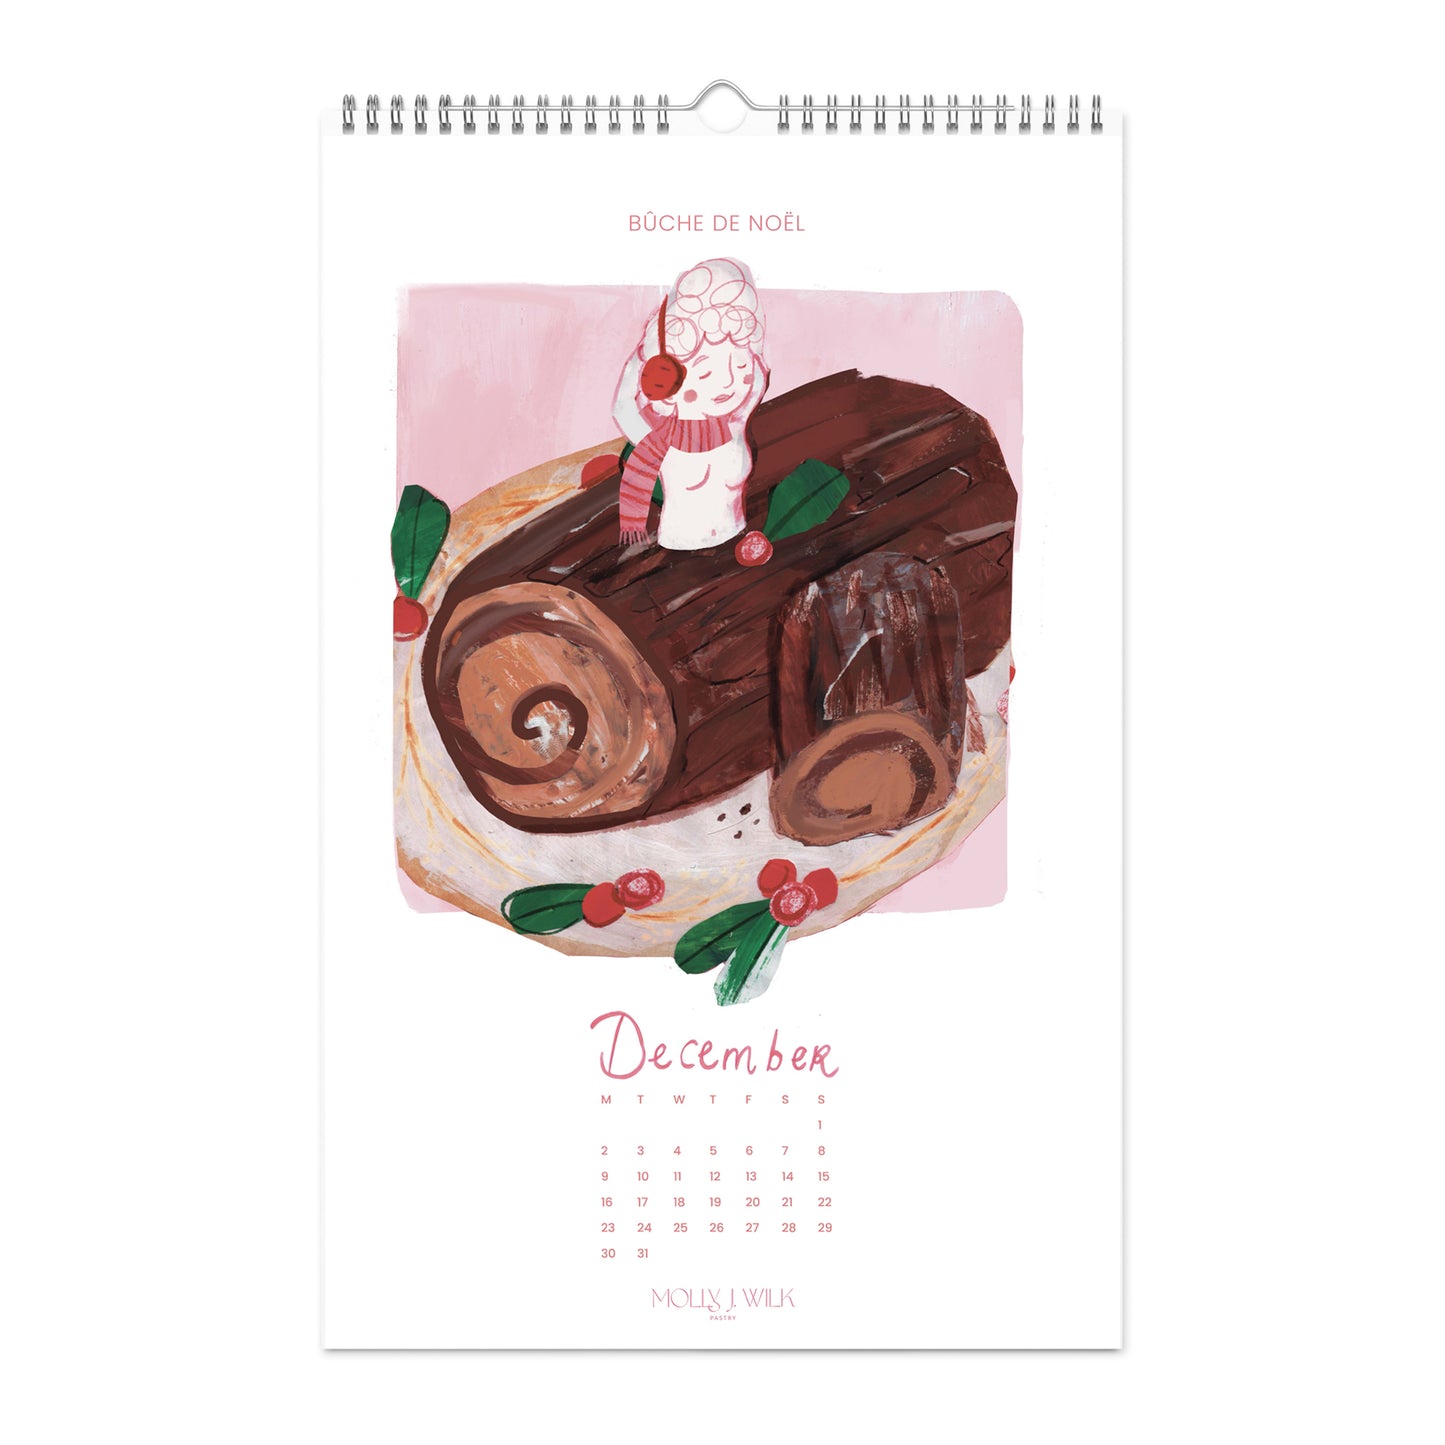 French Pastry Calendar 2024 | MollyJWilk x Anna Lena